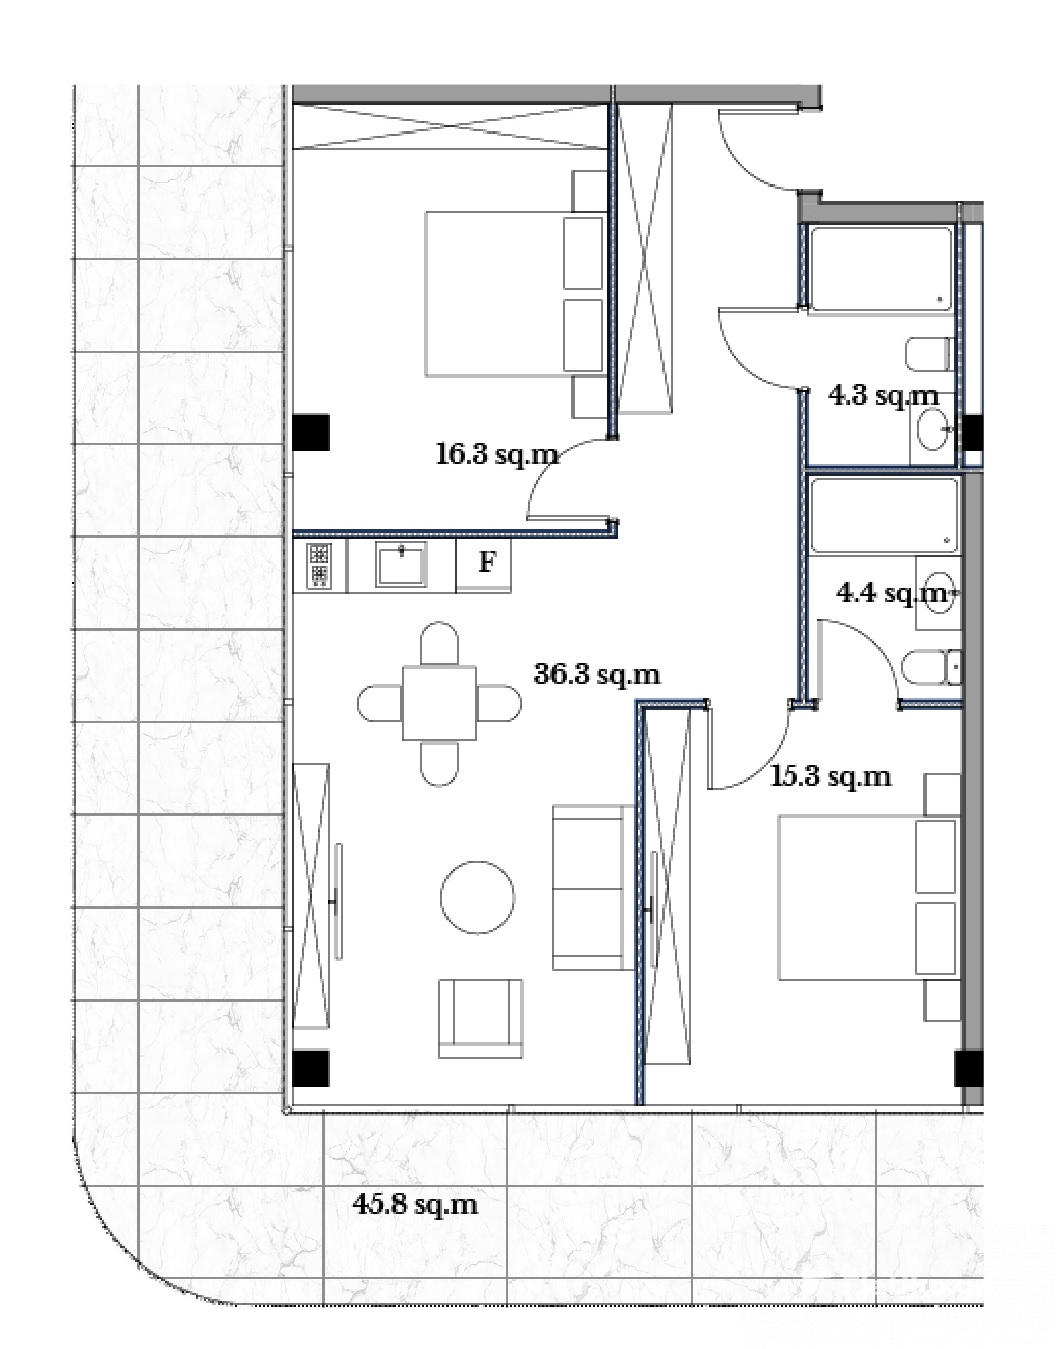 2-Bedroom apartment